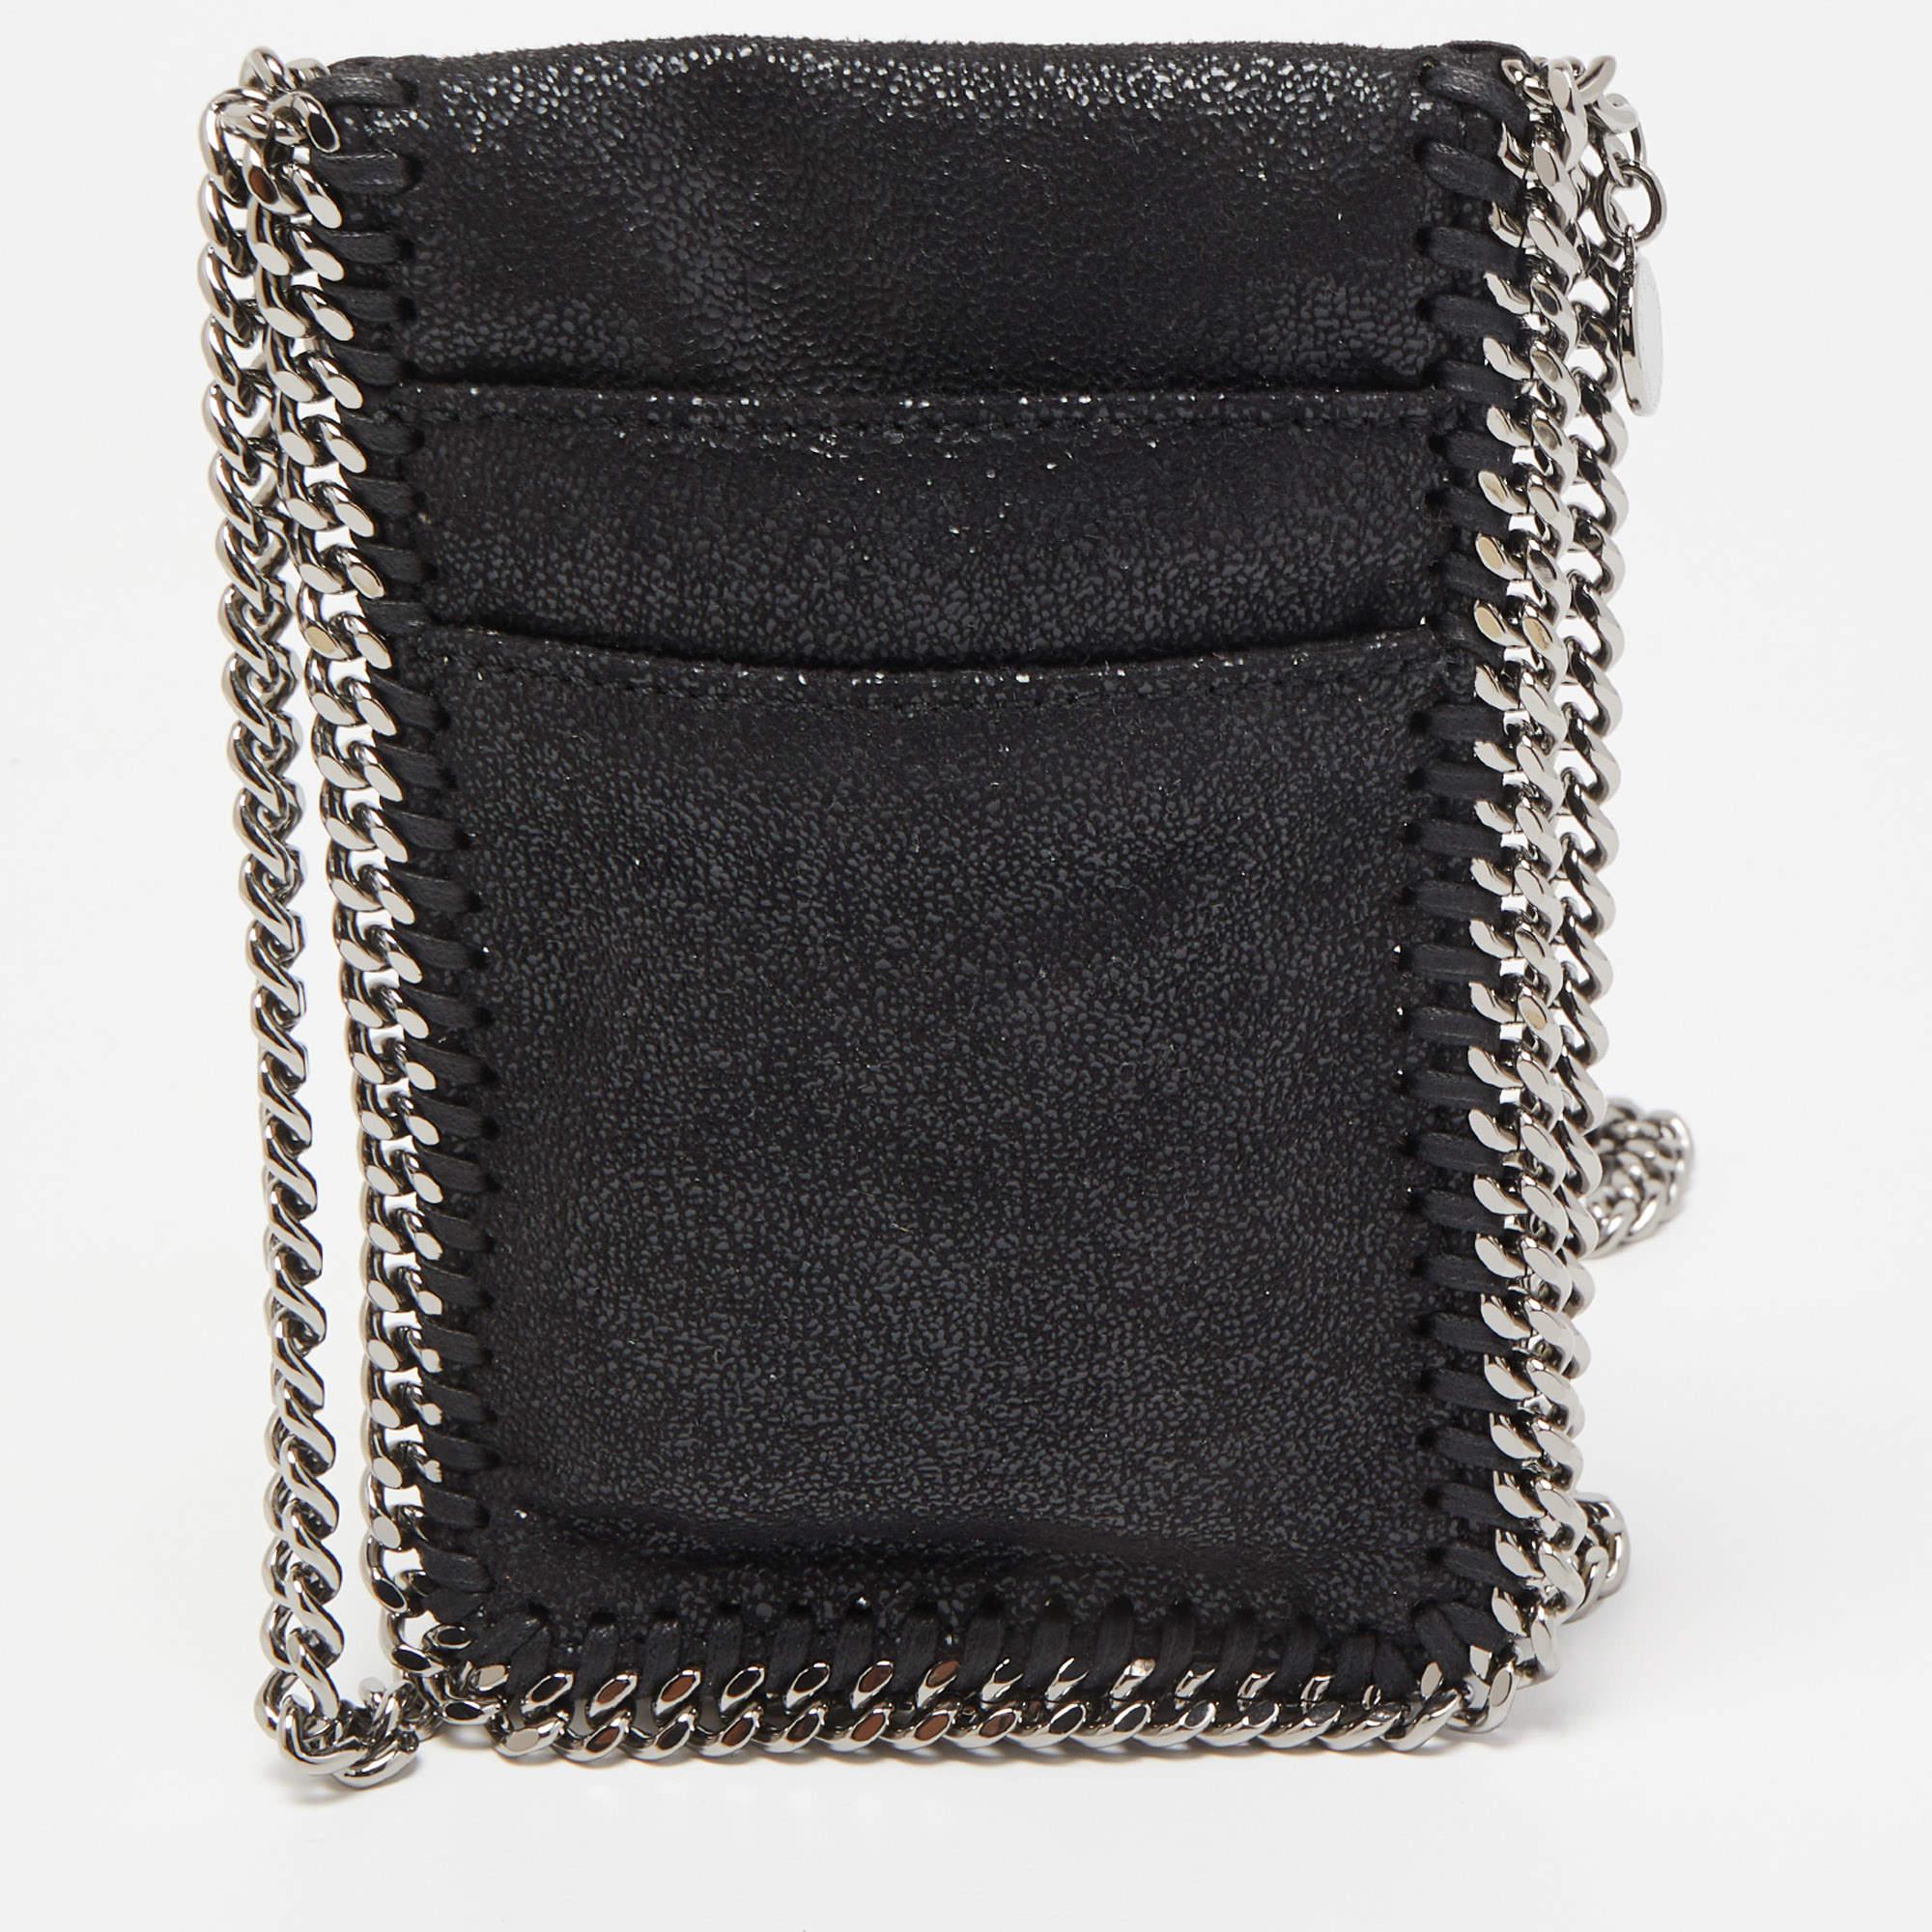  Stella McCartney Black Faux Leather Falabella Phone Crossbody Bag Pour femmes 